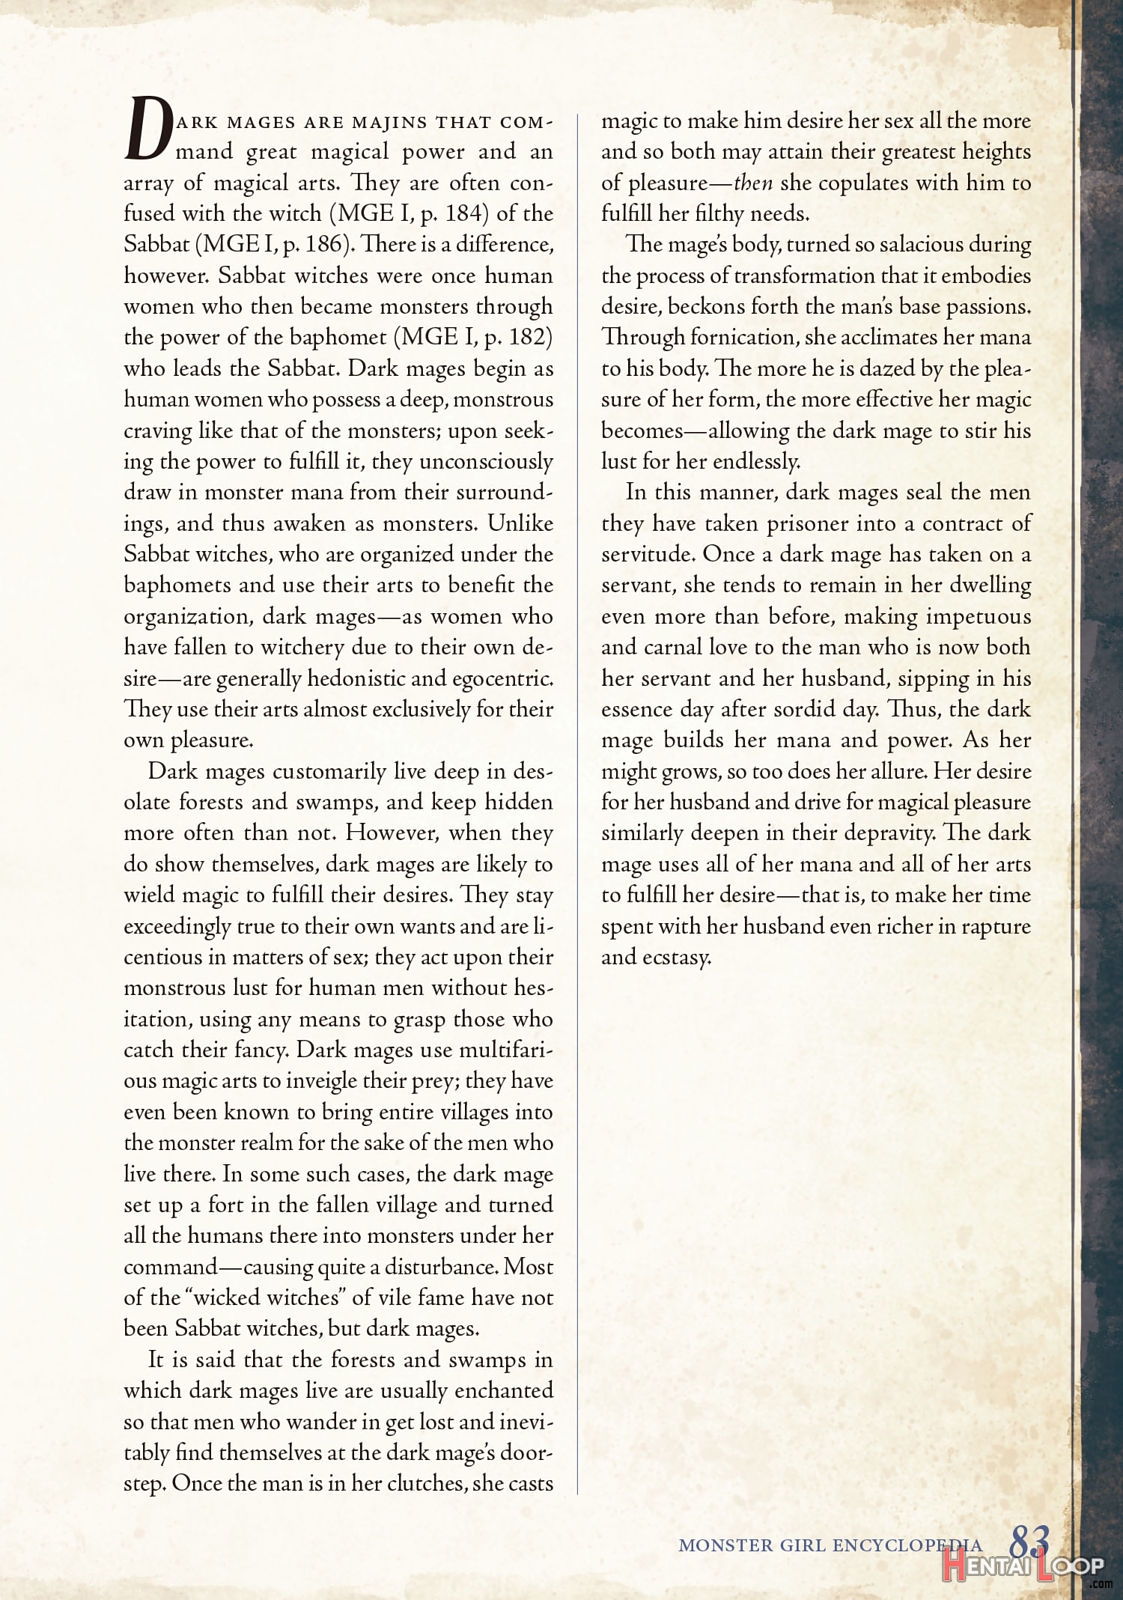 Monster Girl Encyclopedia Vol. 2 page 84